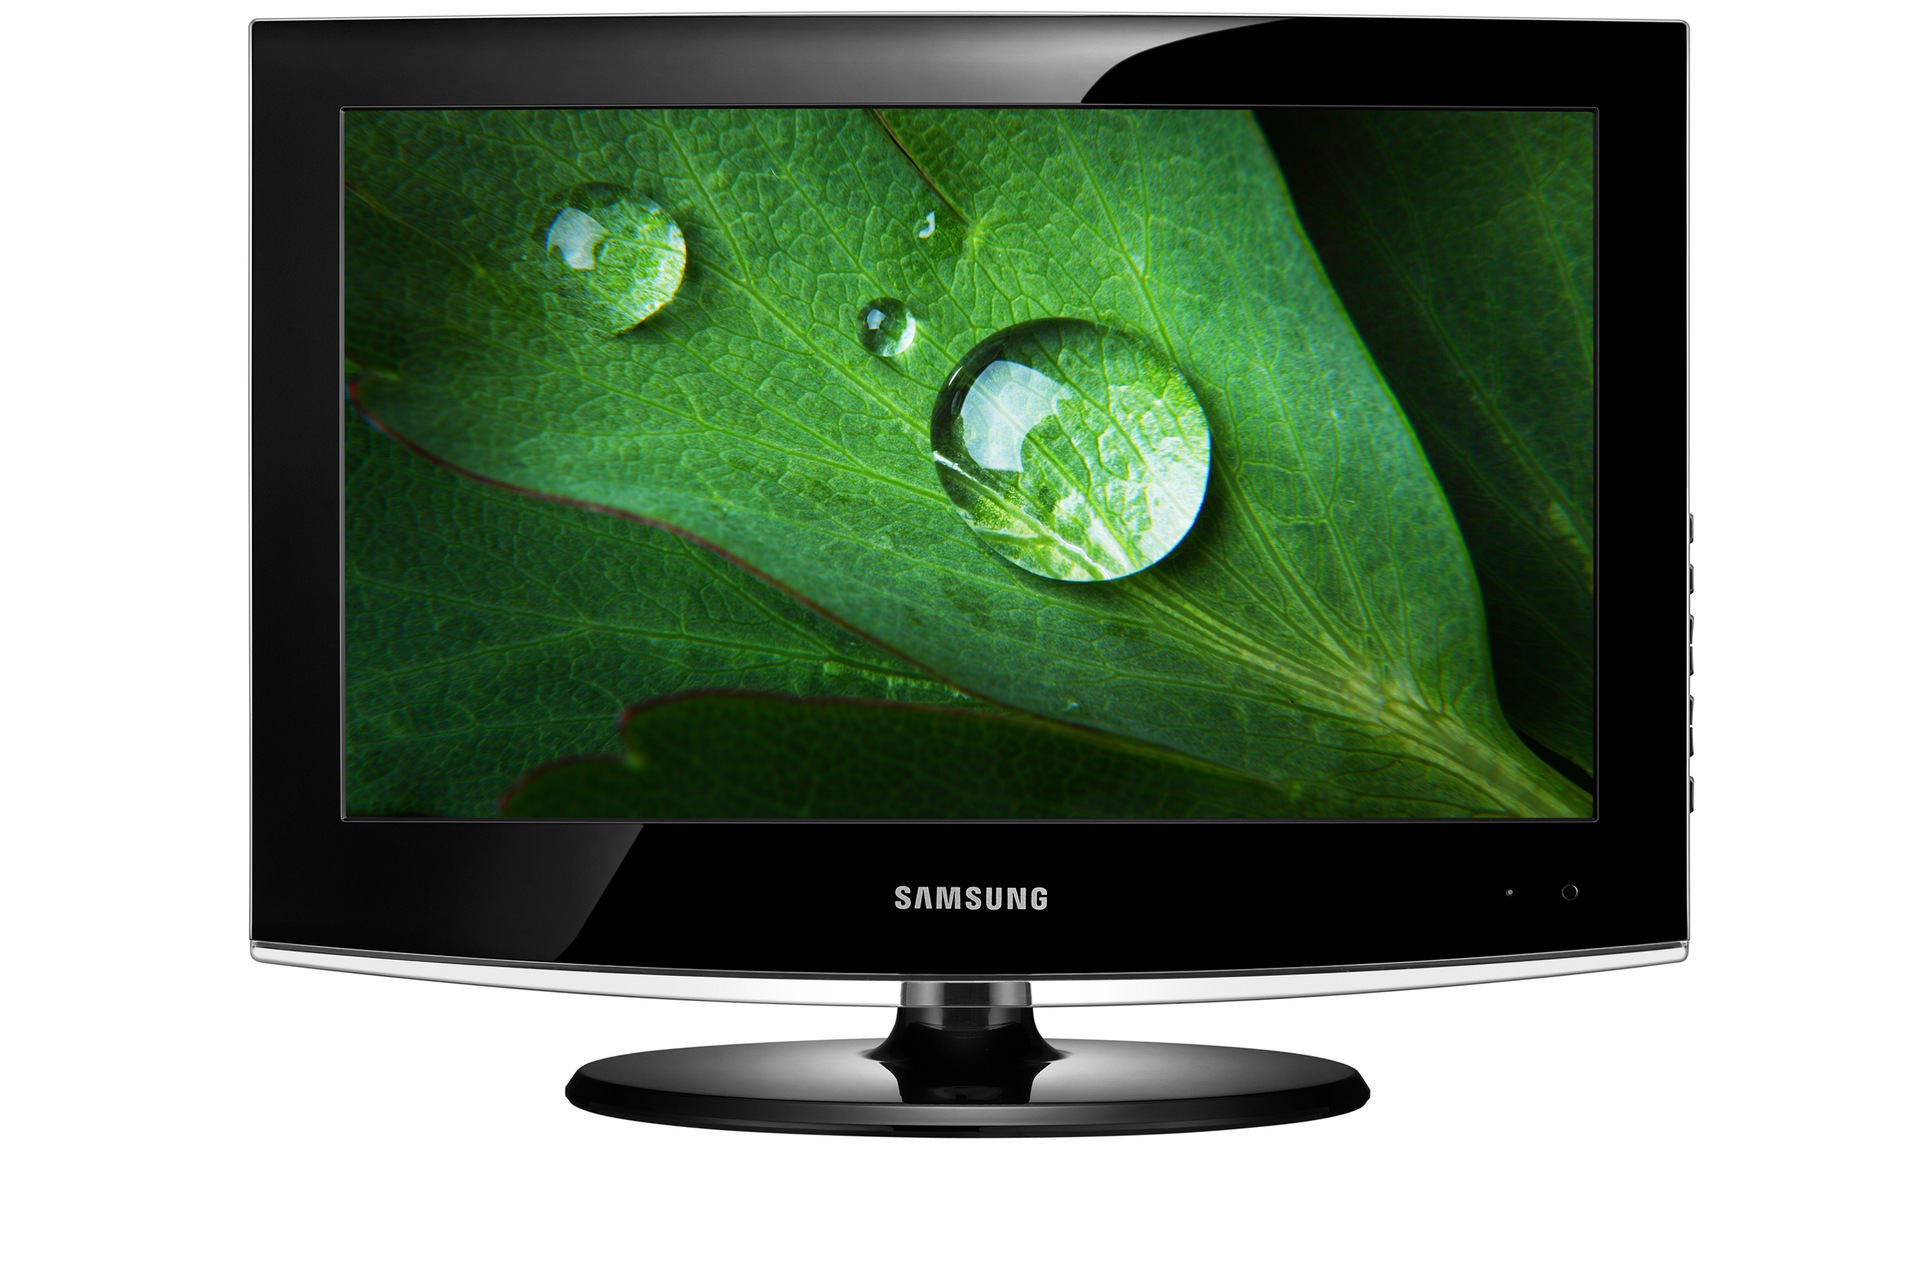 Телевизор самсунг 2010. Samsung le-32c350. Телевизор Samsung le-40a330j1 40". Телевизор Samsung le-32a330j1 32". Телевизор Samsung le32e420 32".